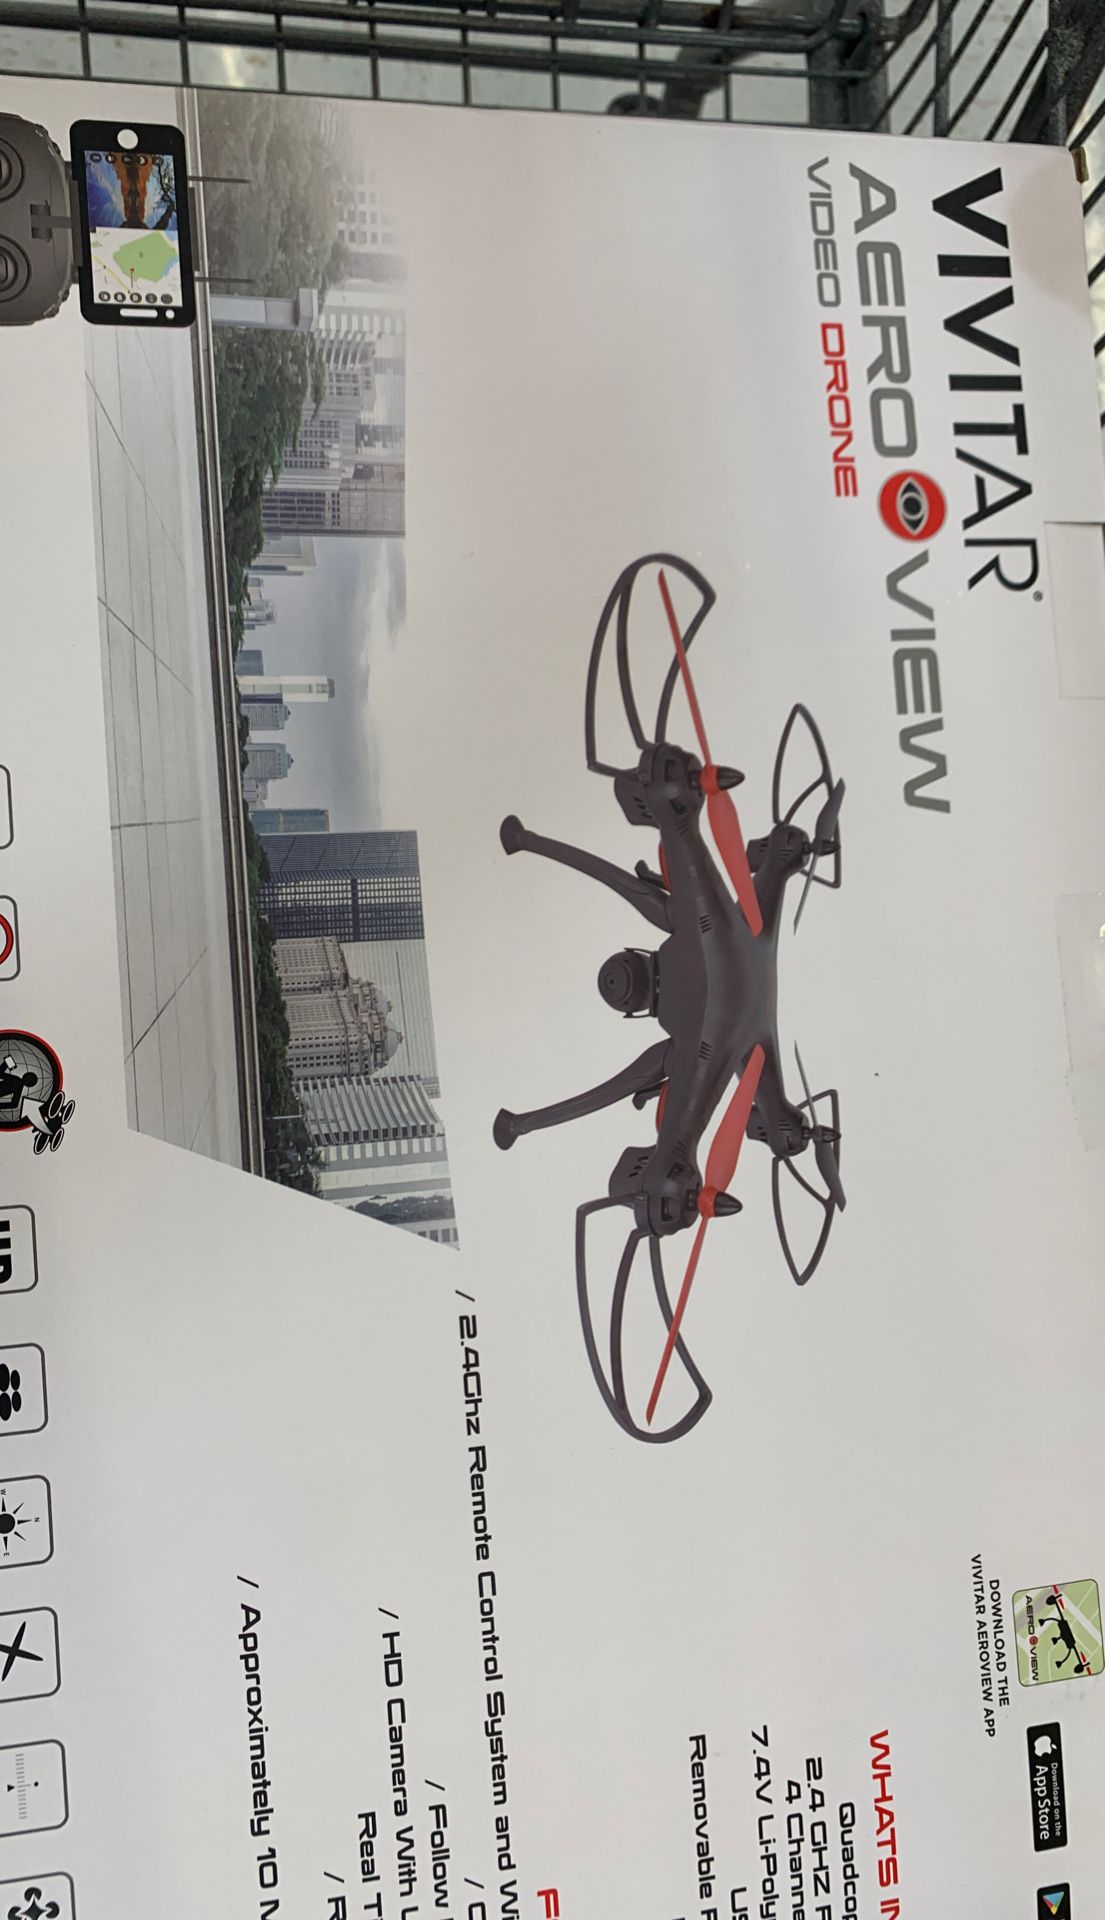 Vivitar Aero View Drone